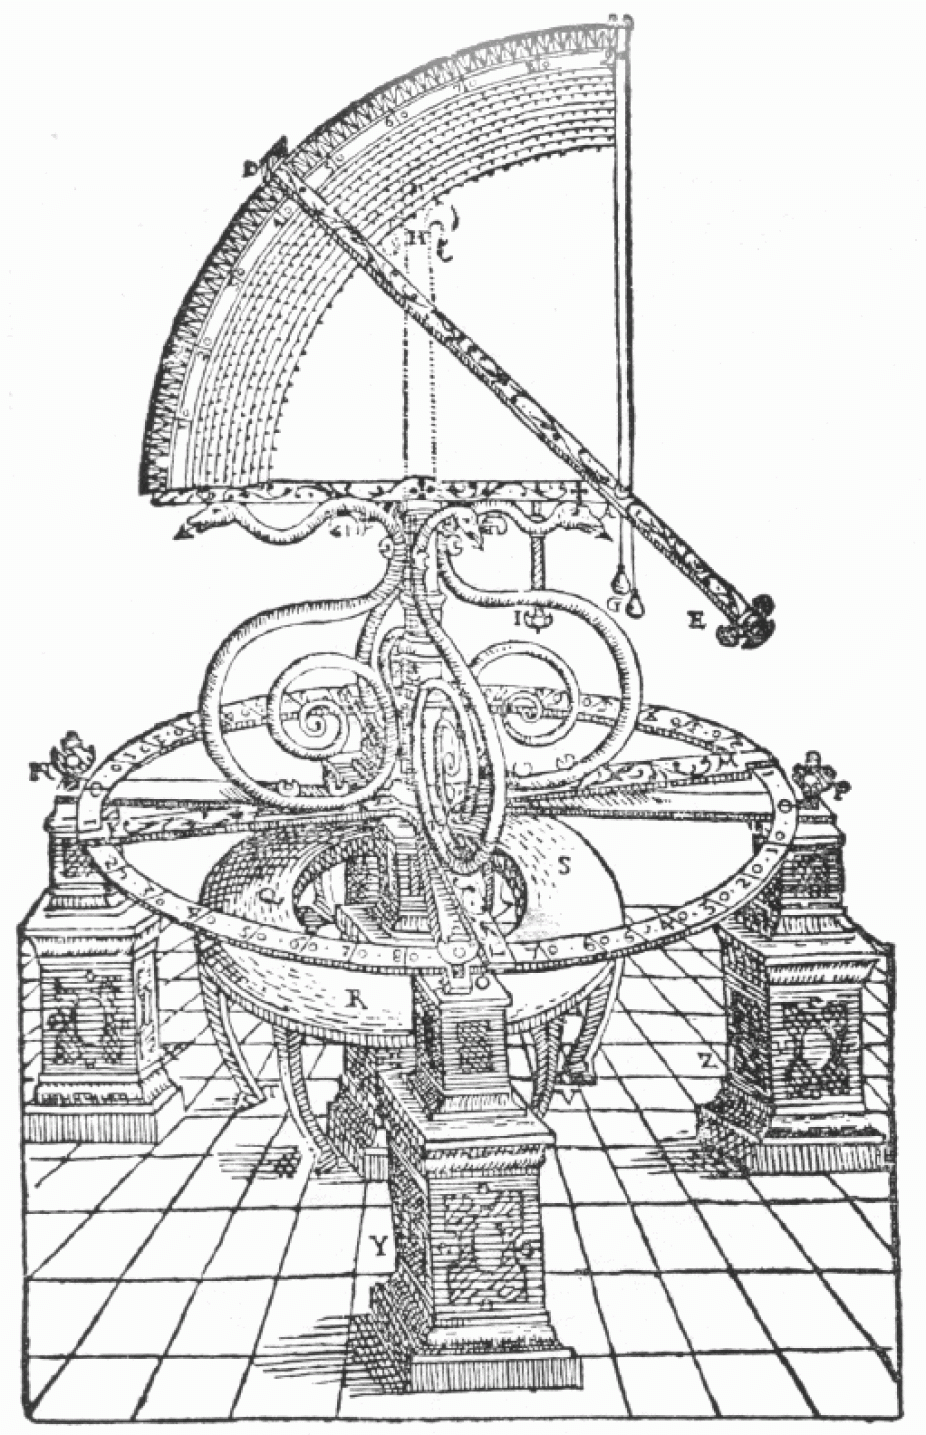 1576 brass azimuthal quadrant